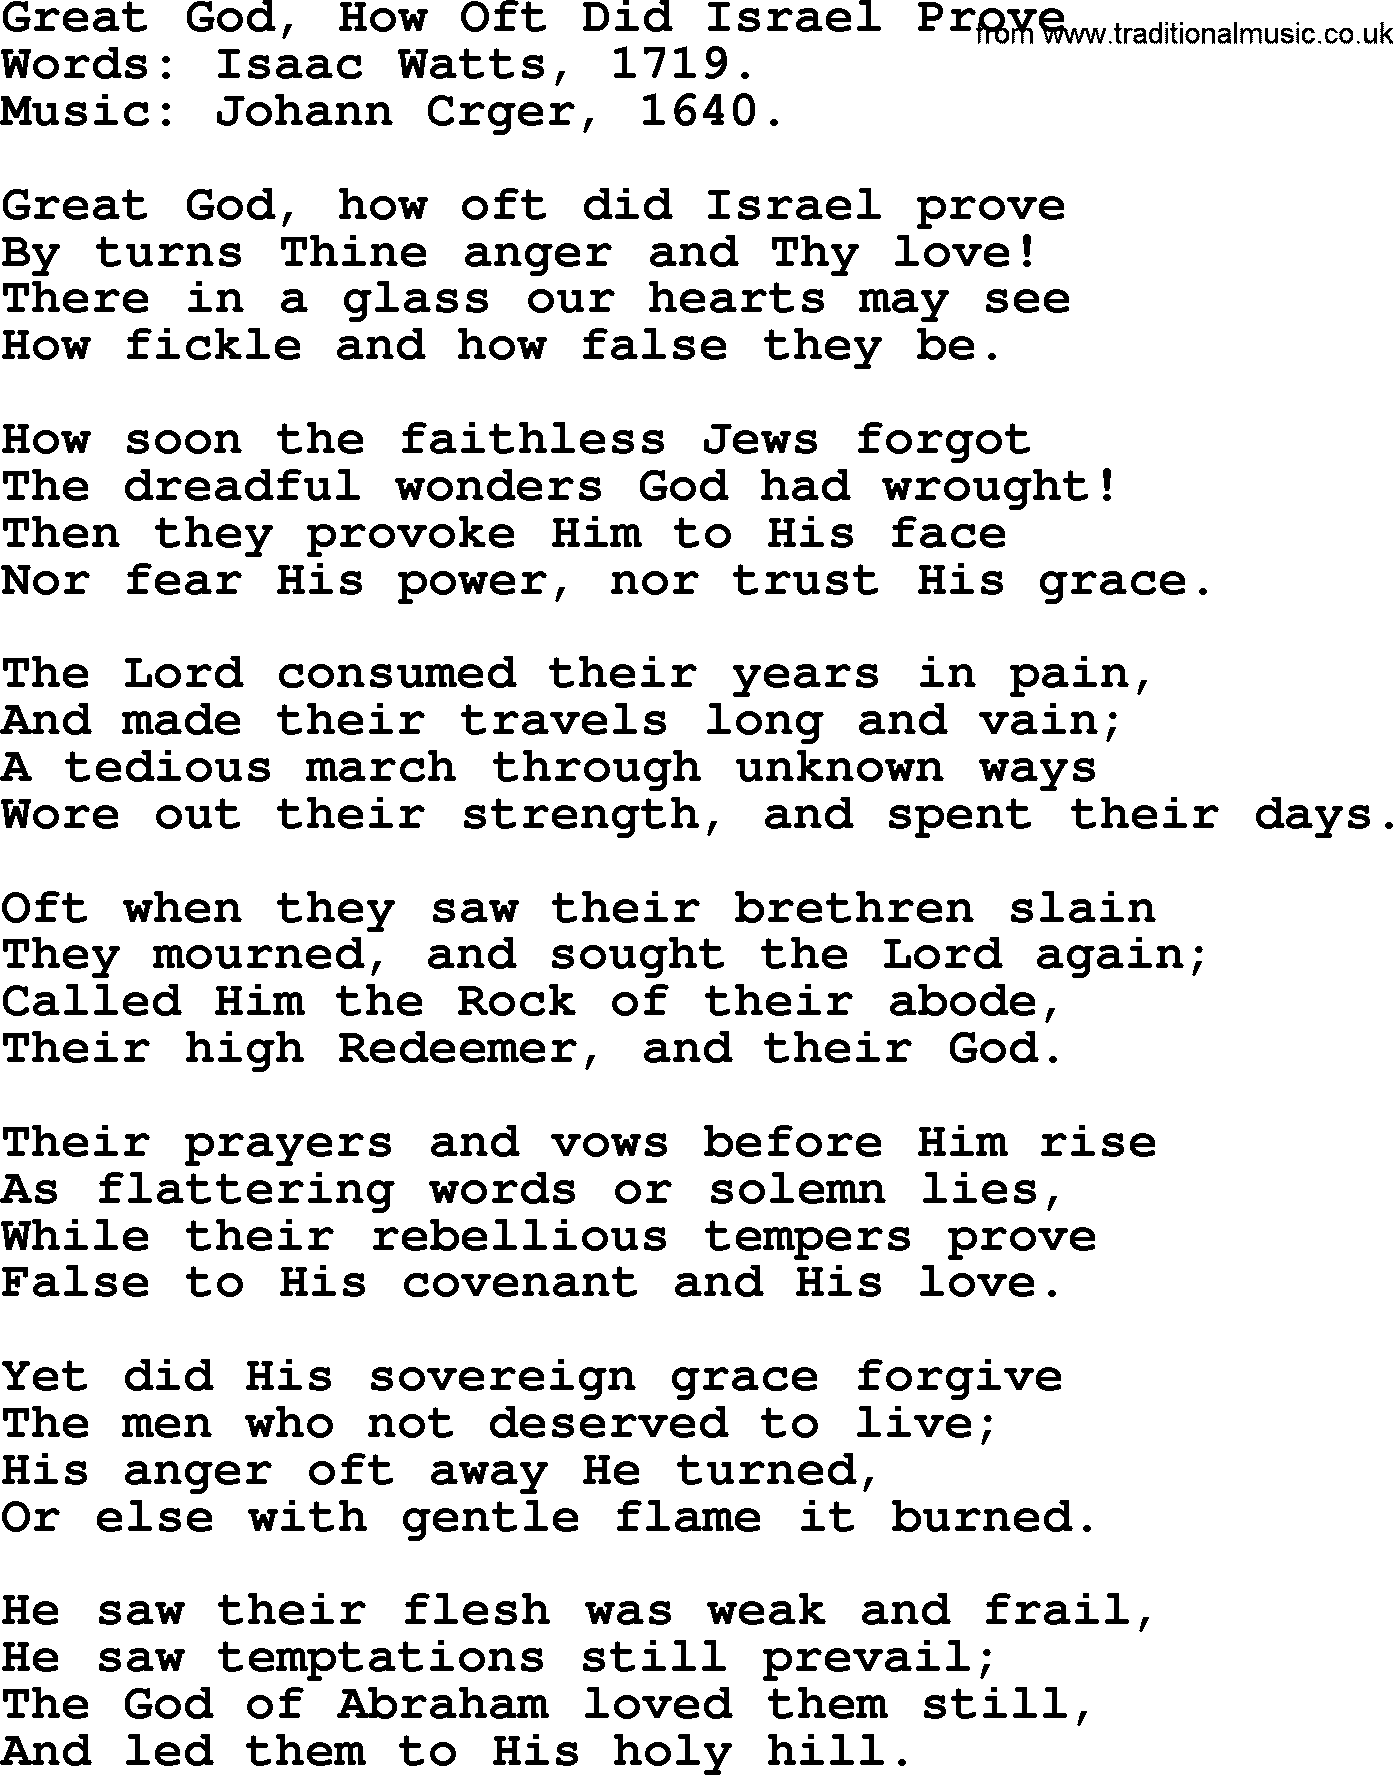 Isaac Watts Christian hymn: Great God, How Oft Did Israel Prove- lyricss